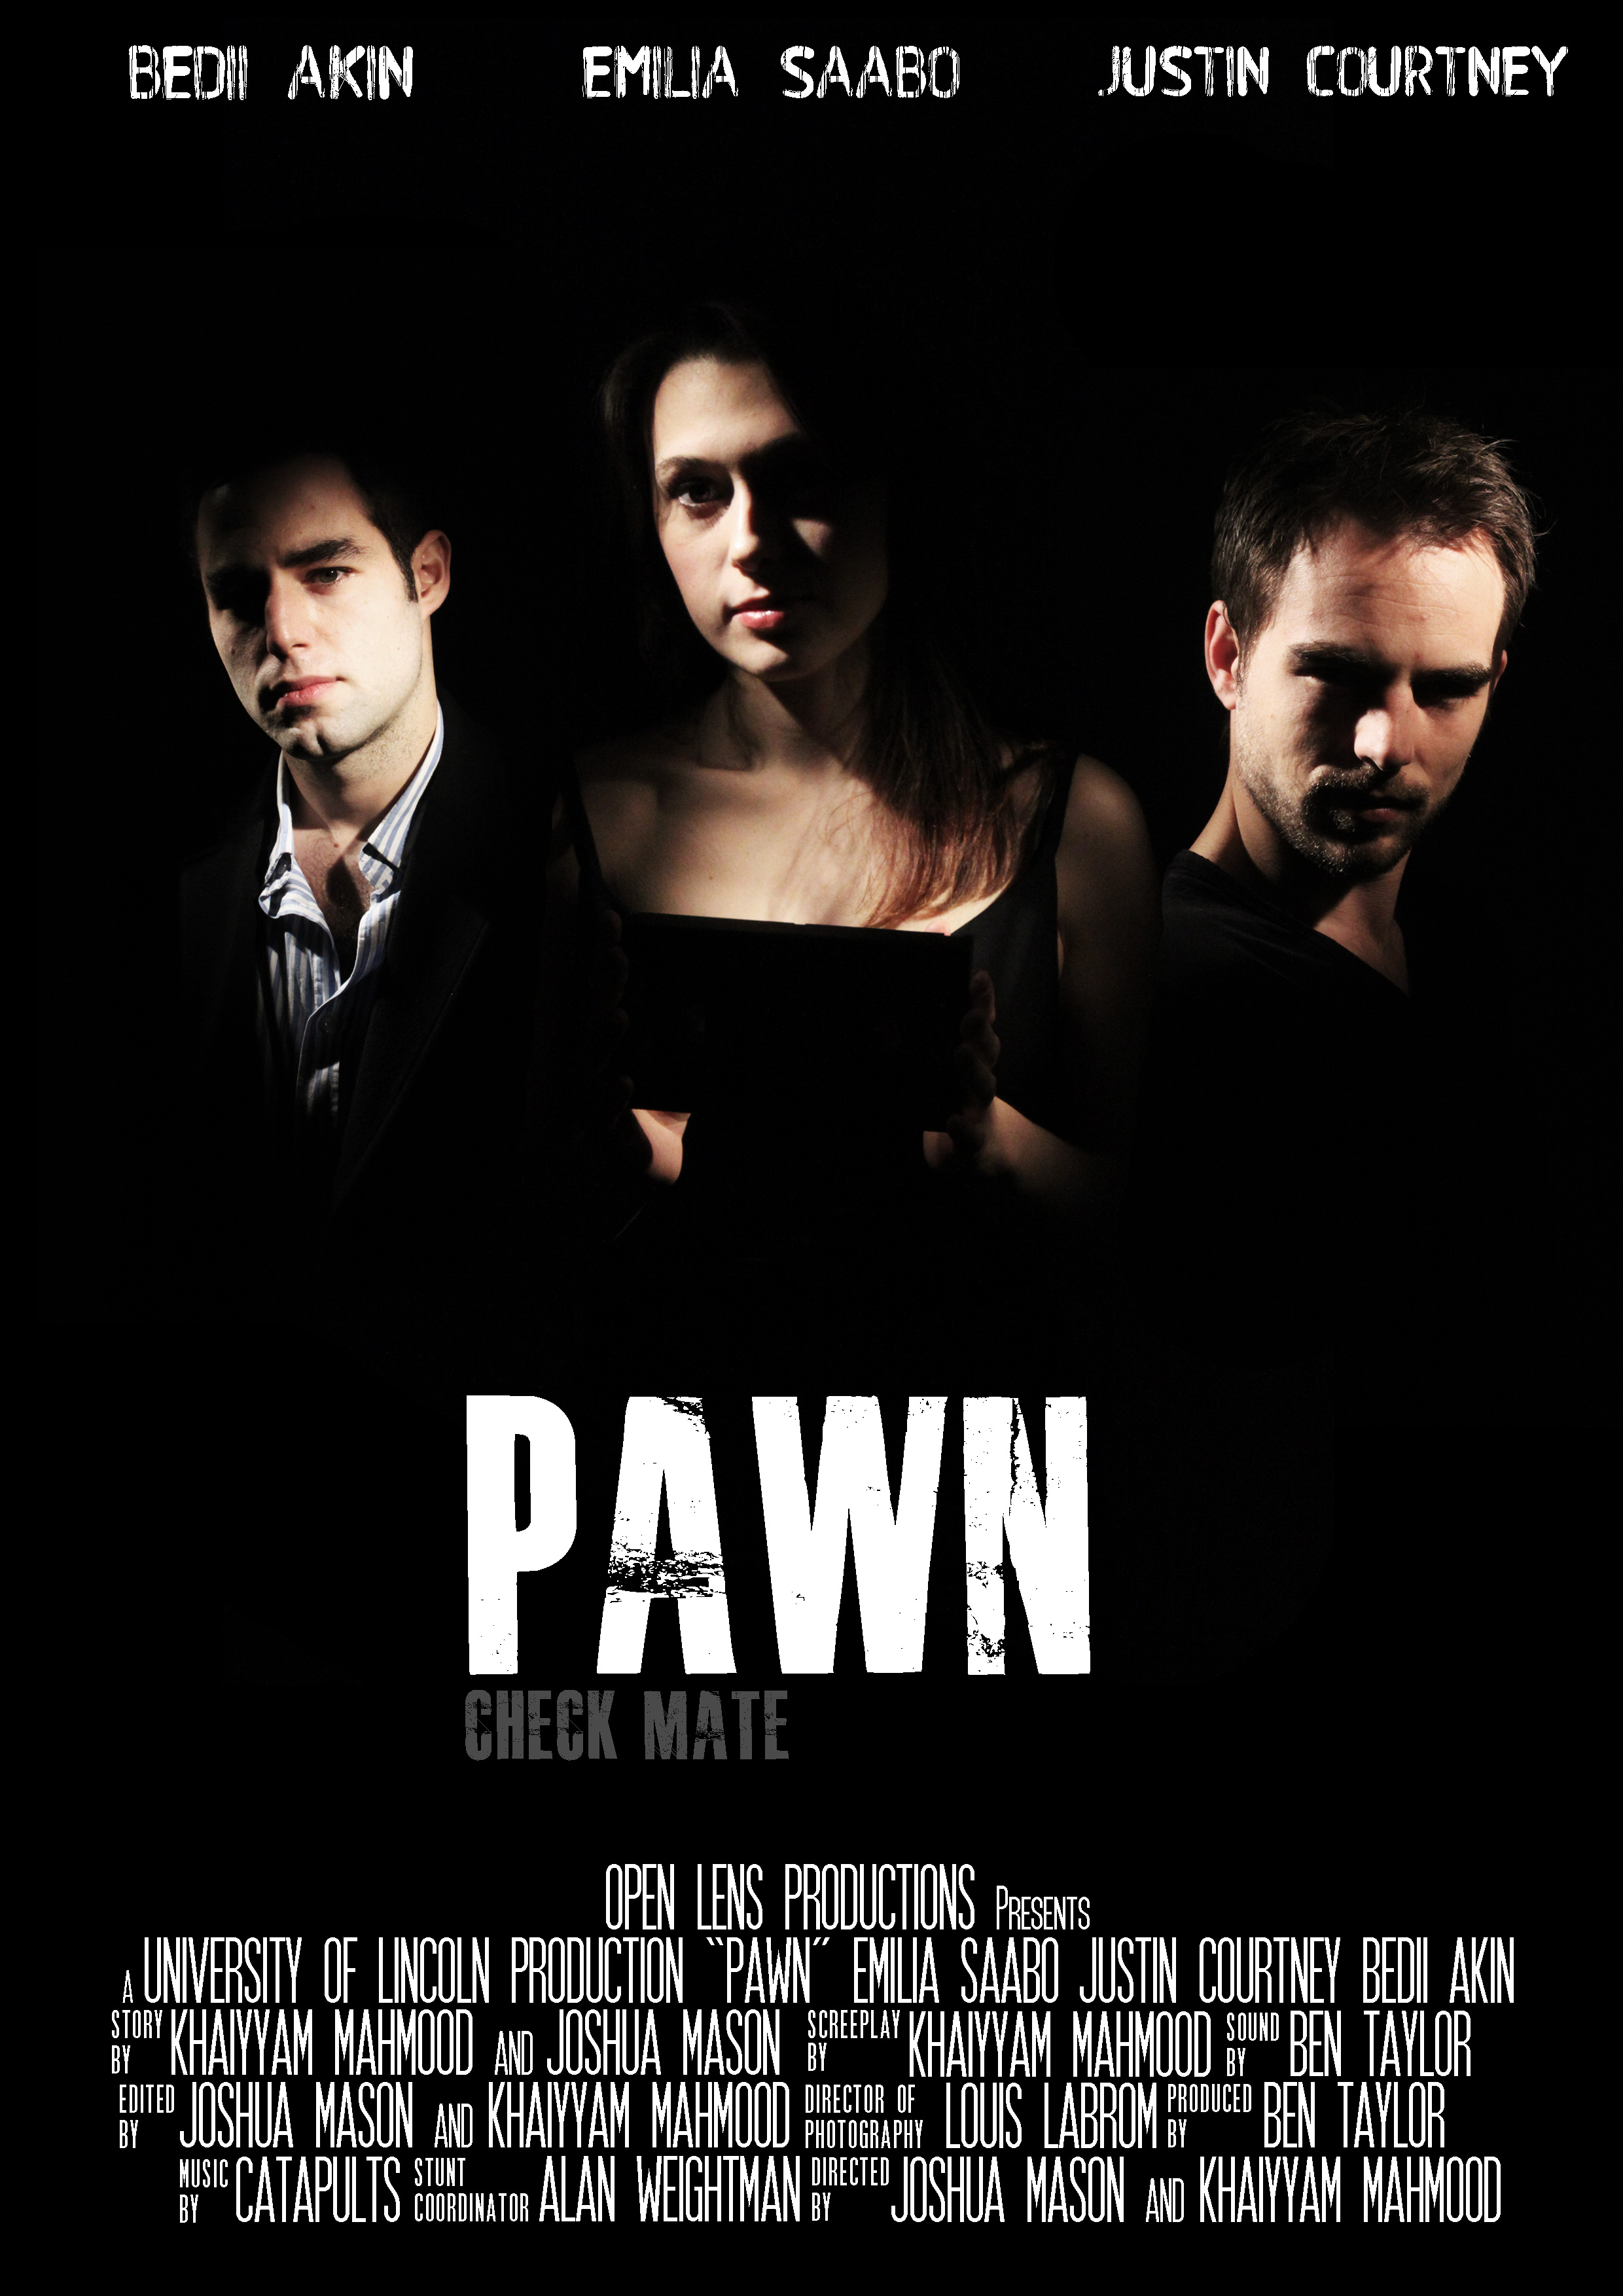 Draft Edit Poster of the short film 